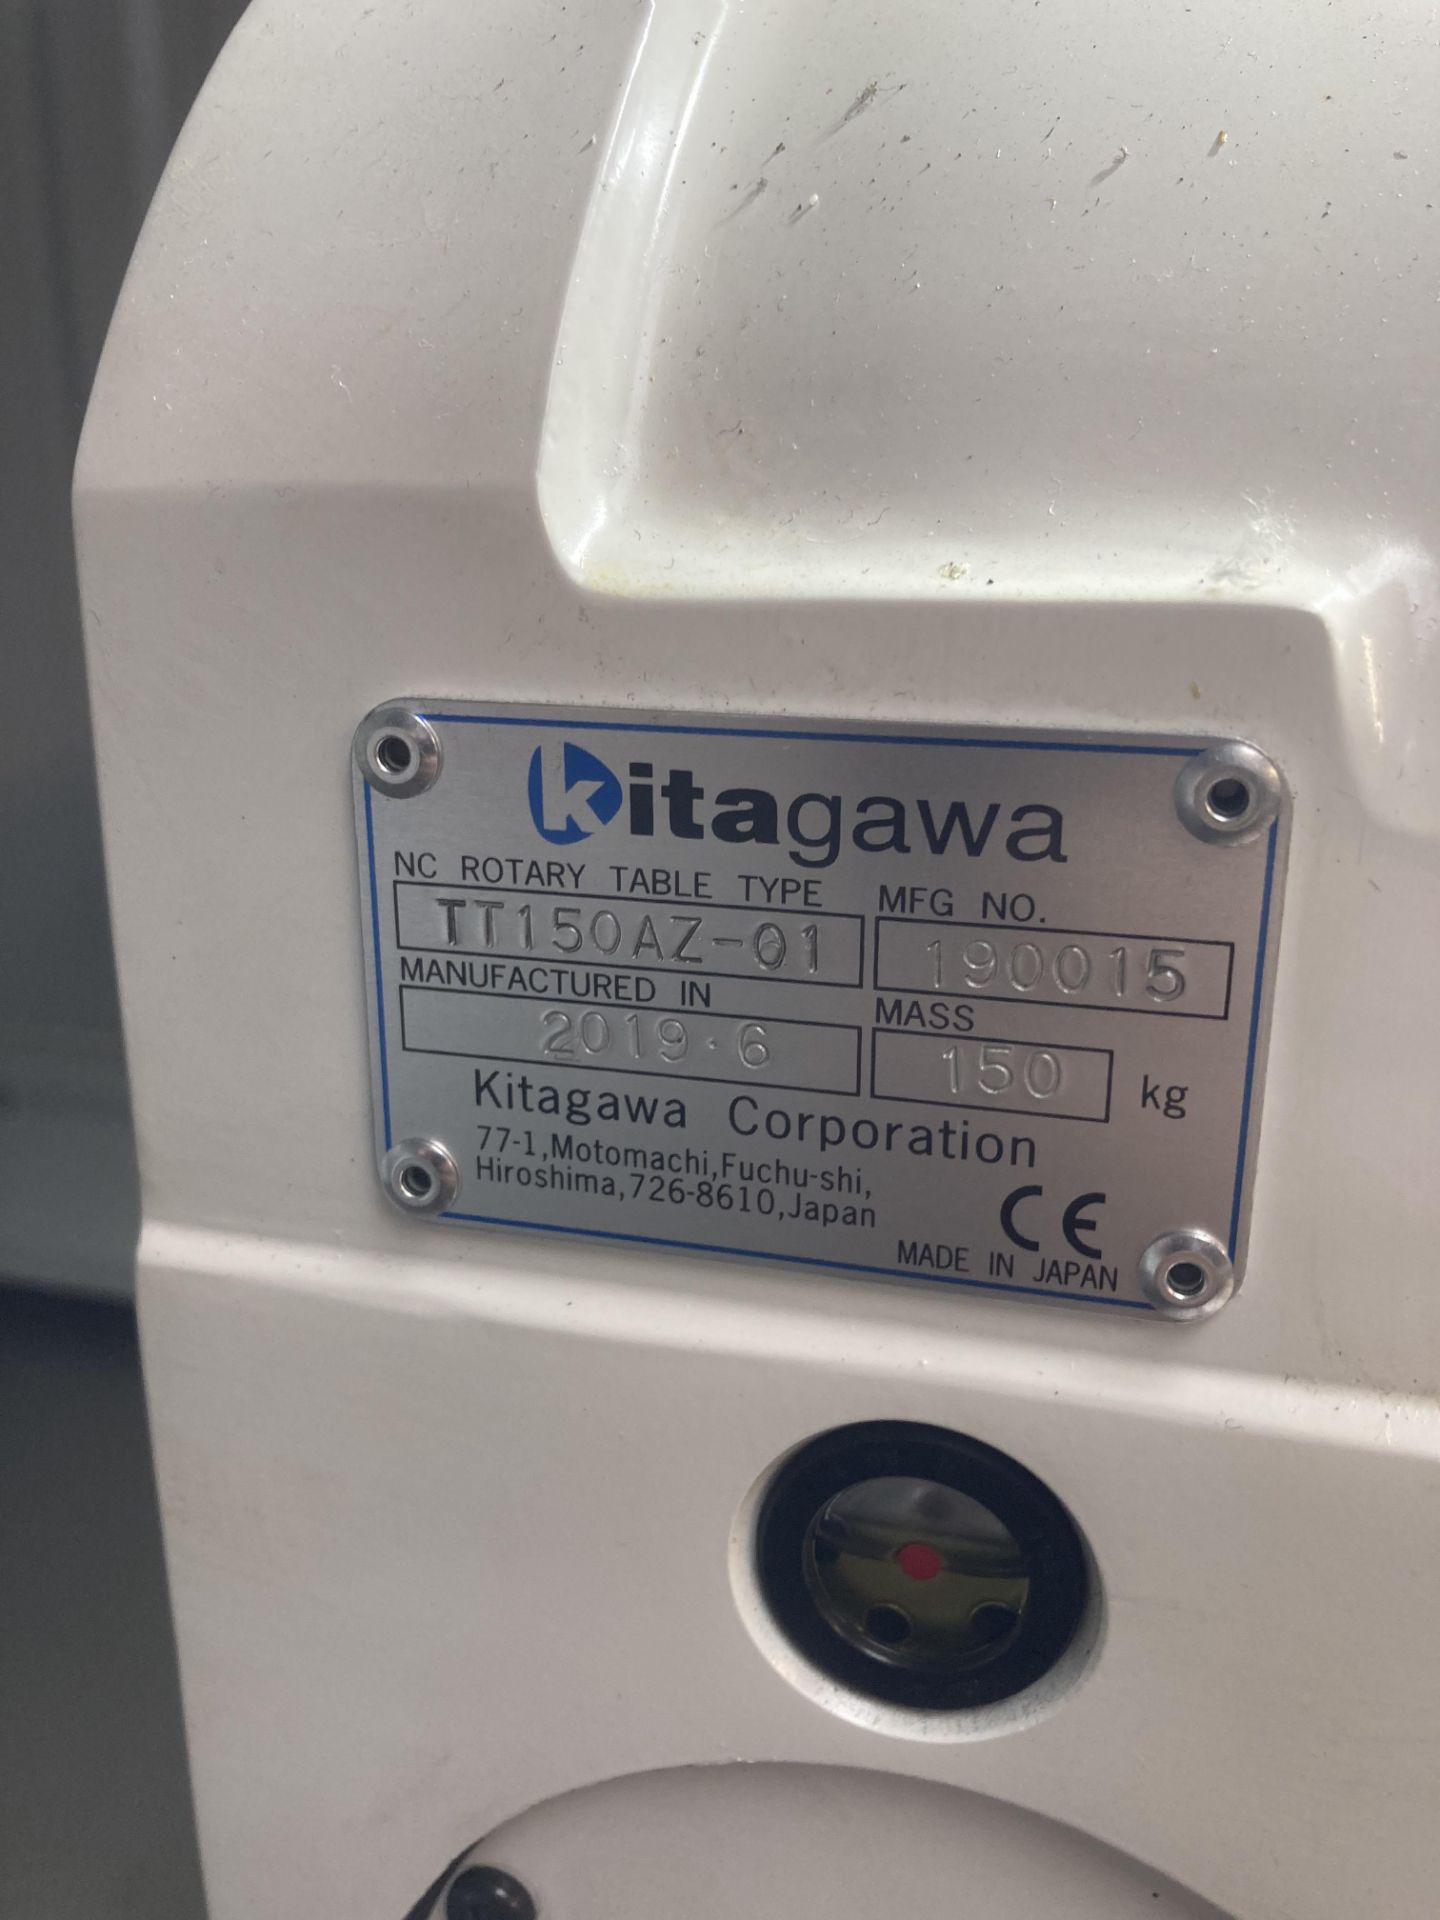 Kitagawa Type TT150AZ-01 NC rotary table 4th axis, , Serial No. 190015 (2019) - Image 3 of 3